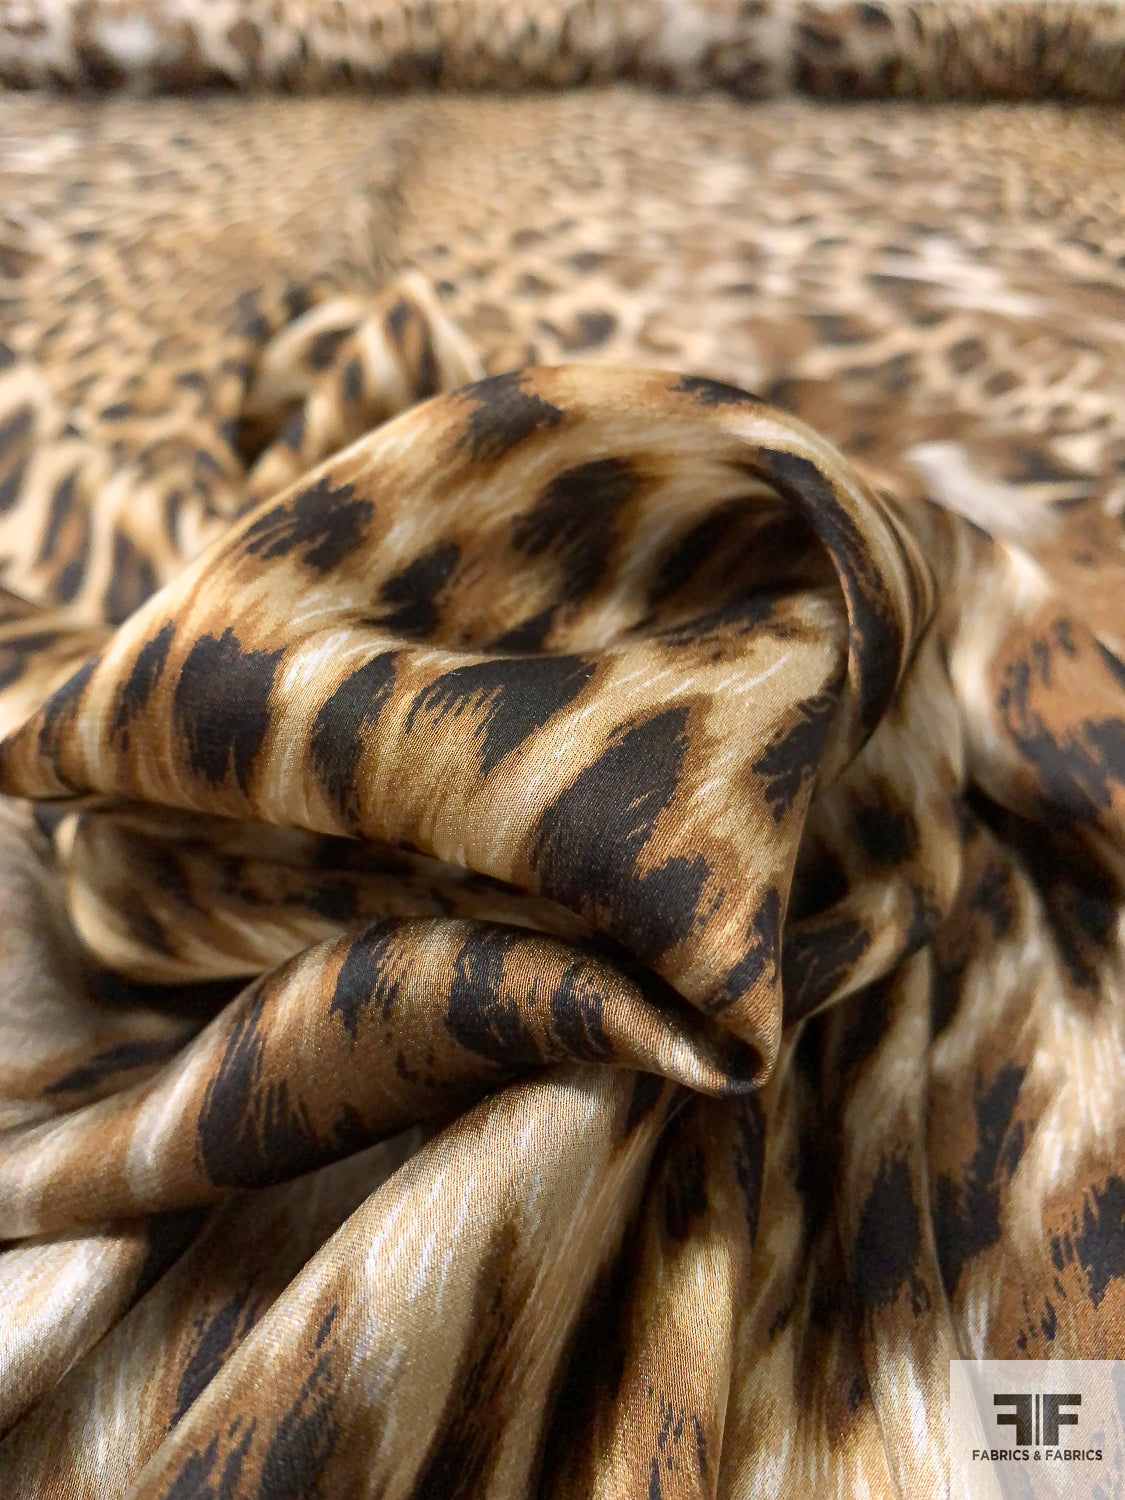 Leopard Printed Satin Silk Chiffon - Browns / Tan